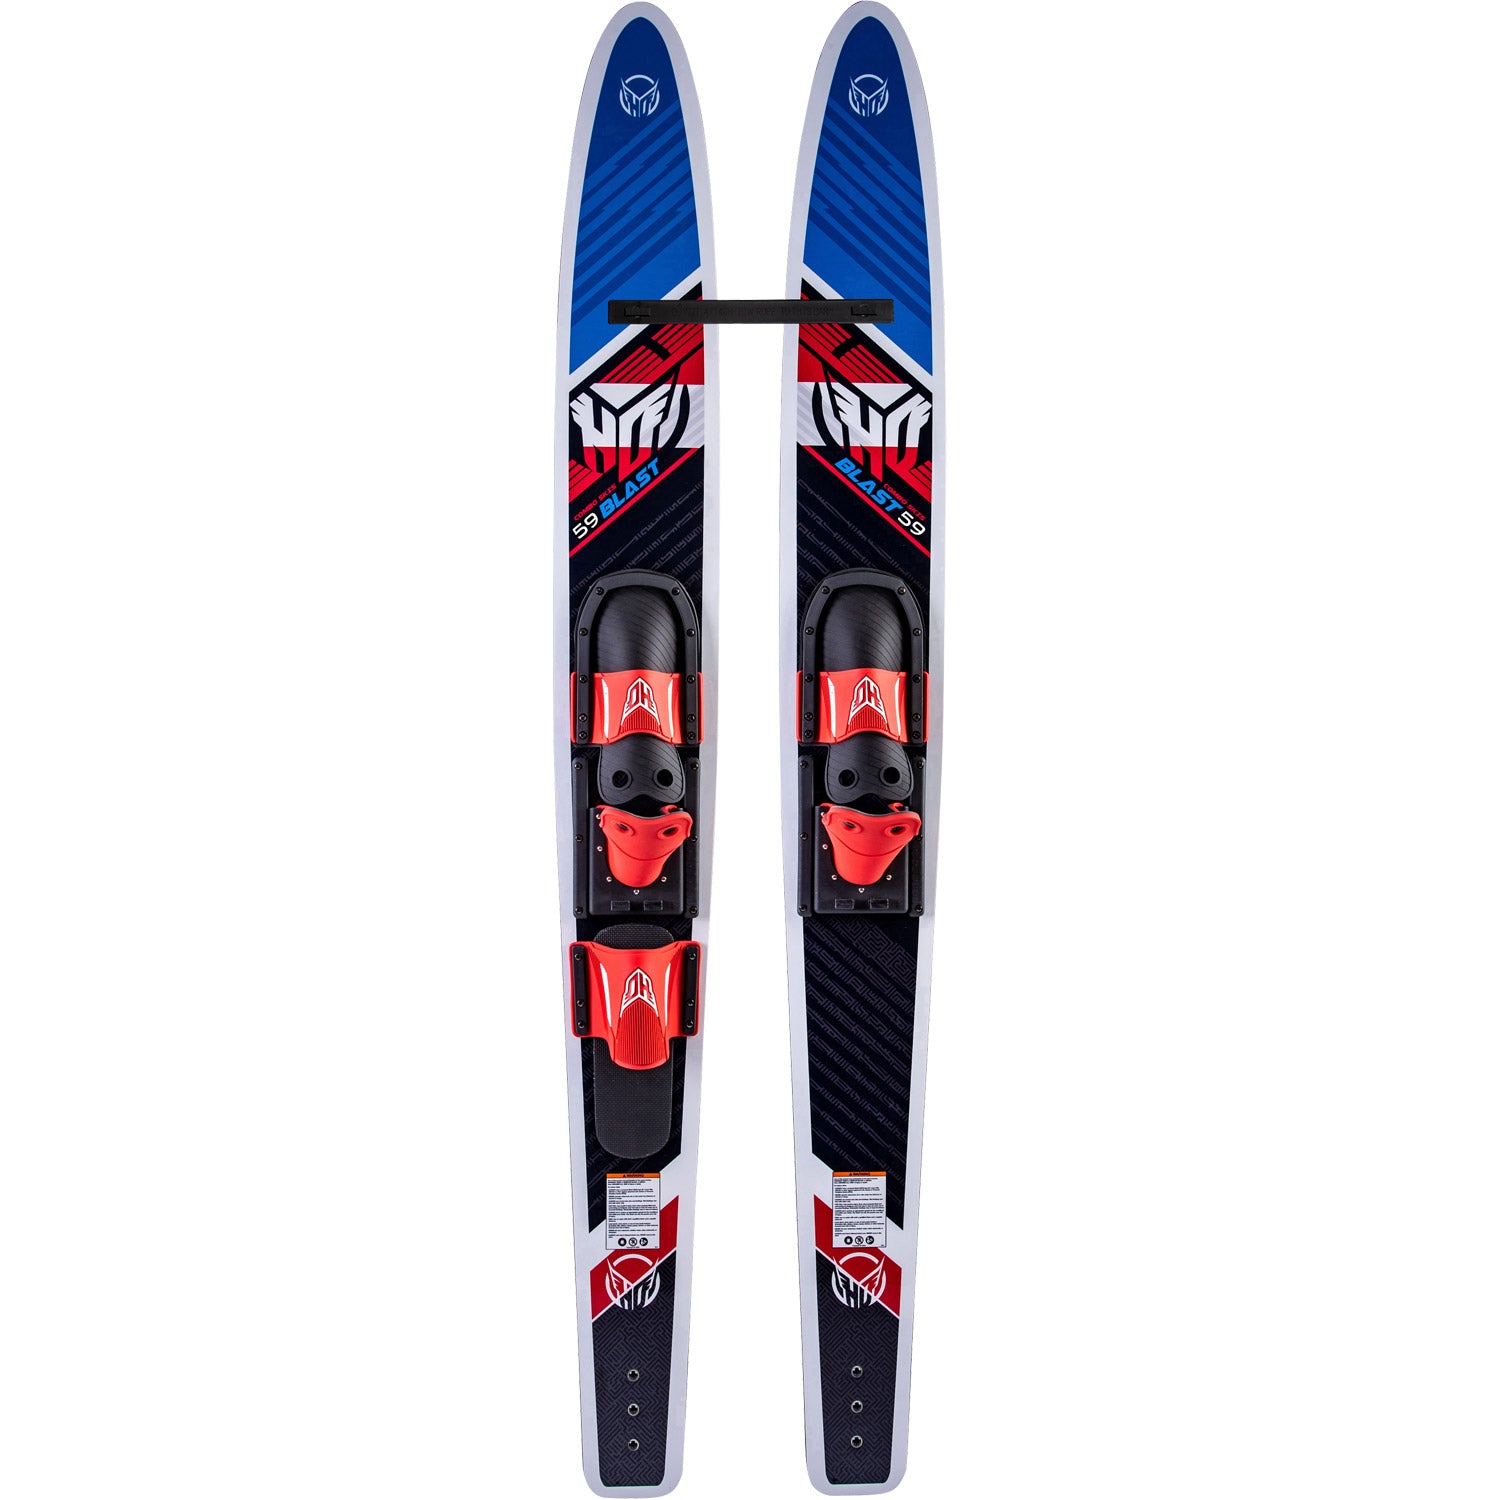 Blast Jr Combo Water Skis